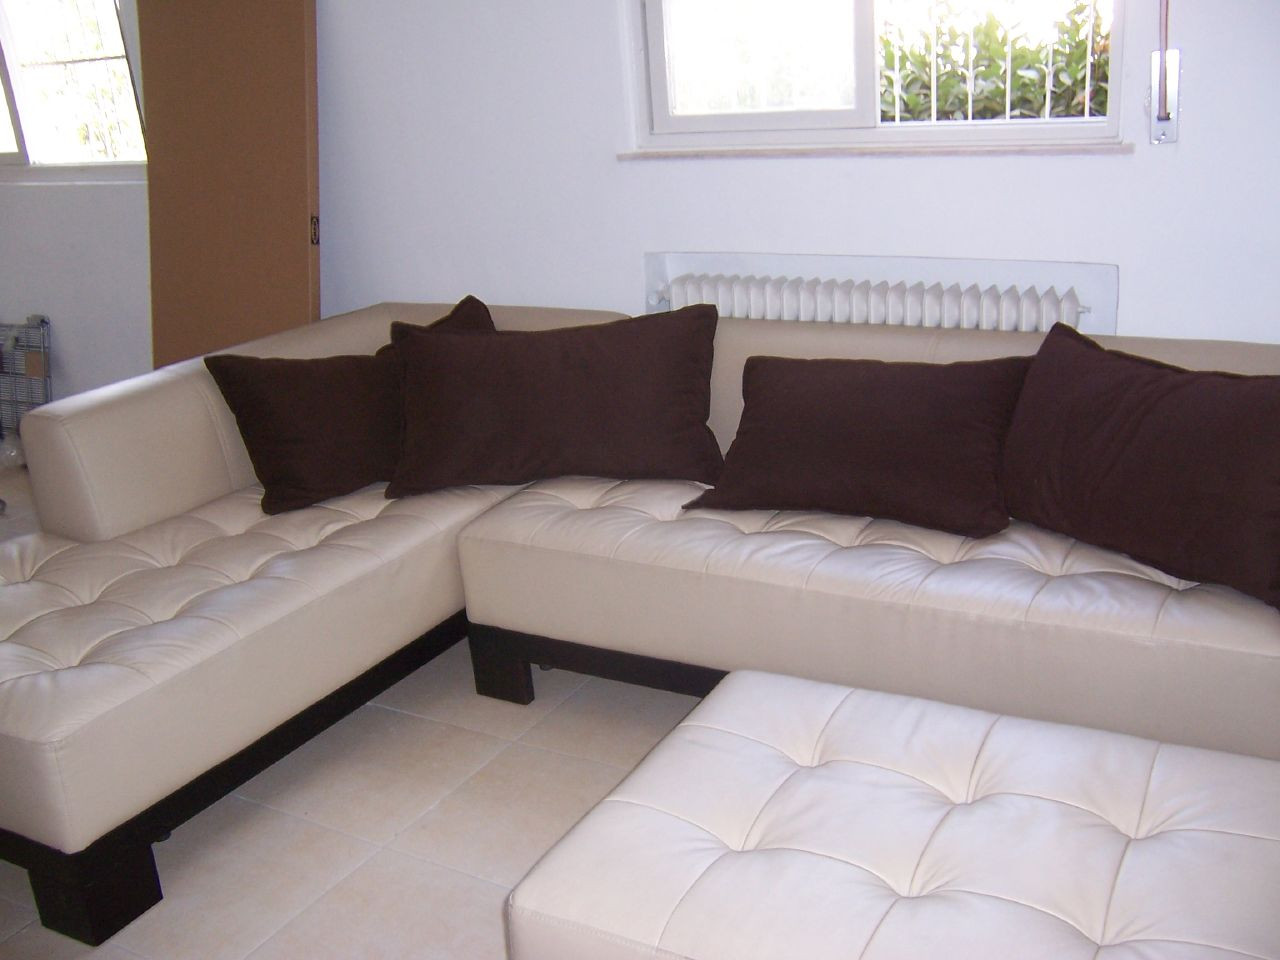 Sofa Diy
 Furniture Diy Modular Red Sectional Sofa For Outdoor With